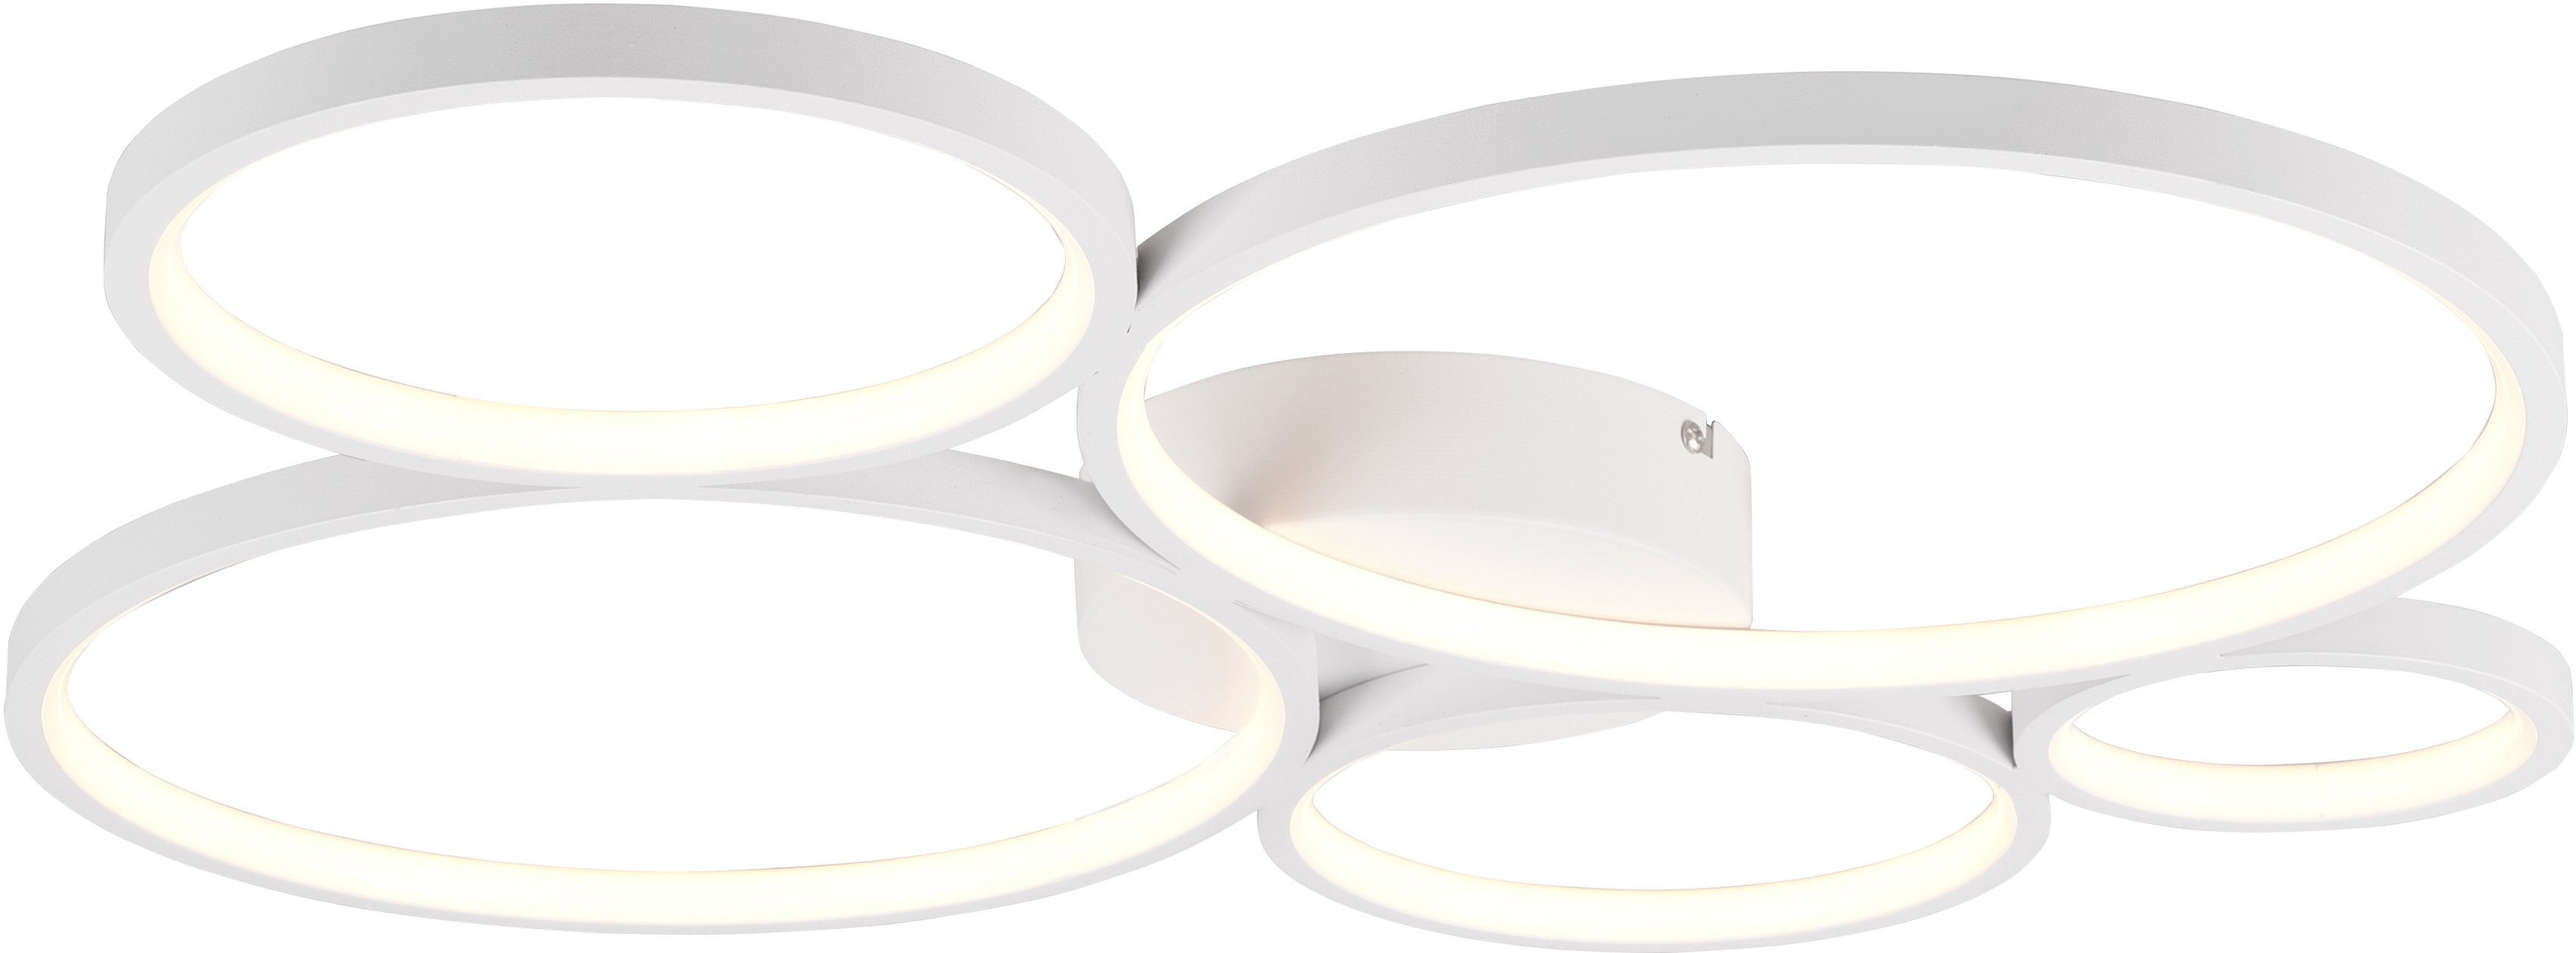 TRIO Leuchten LED Deckenleuchte Rondo, Dimmfunktion, LED fest integriert, Warmweiß, Decken- oder Wandlampe, LED warmweiß 3000K dimmbar per Wandschalter